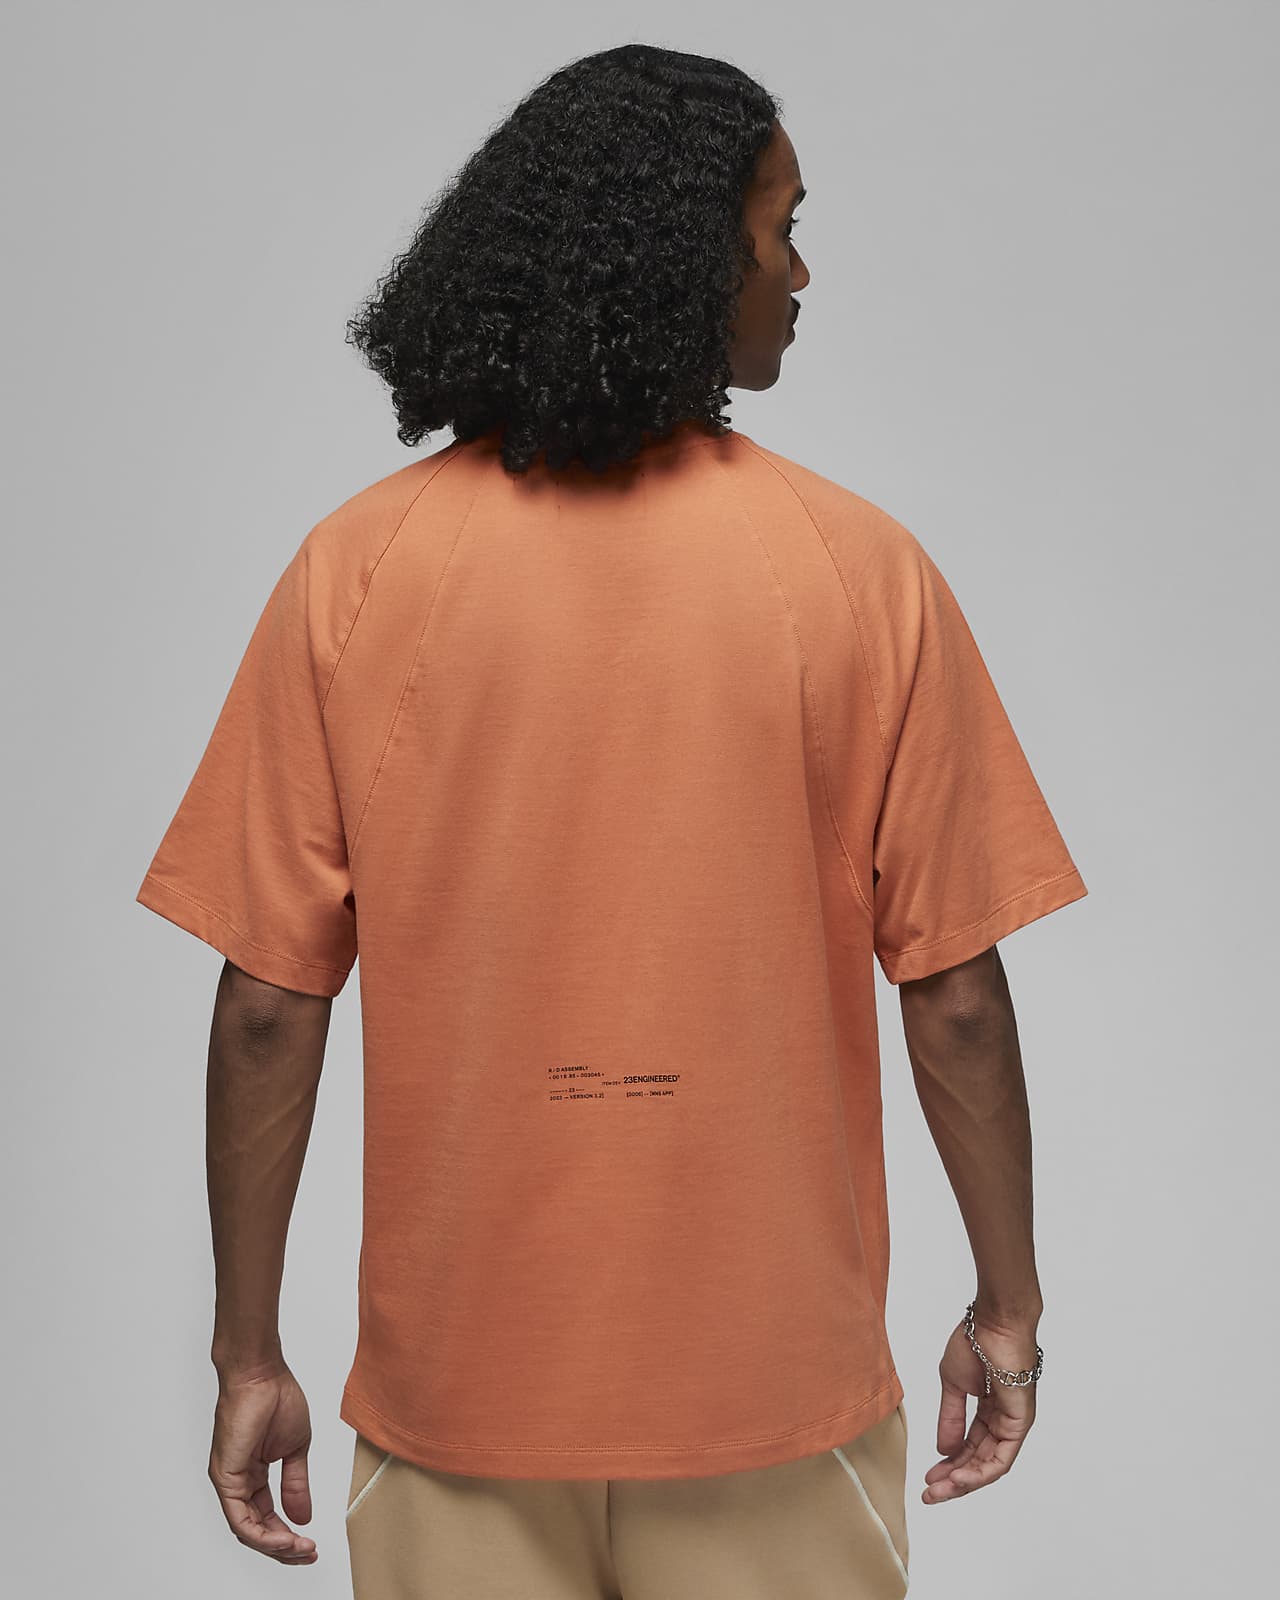 Jordan 23 Engineered Men\'s Nike T-Shirt. CA